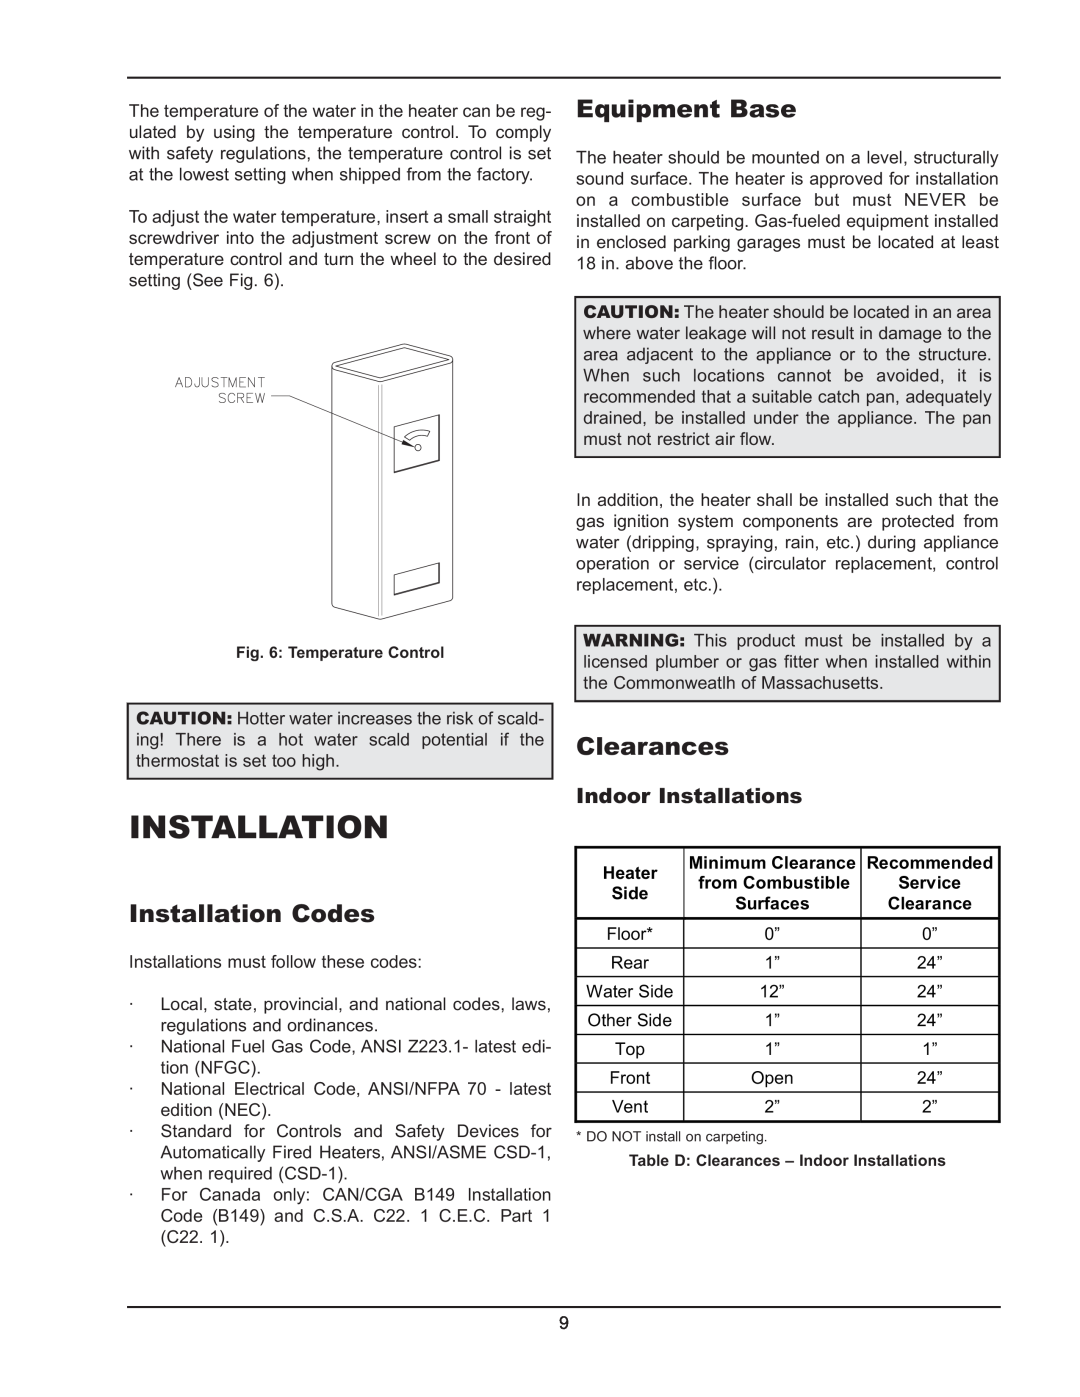 Raypak 122-322 manual Installation Codes, Equipment Base, Clearances, Indoor Installations 